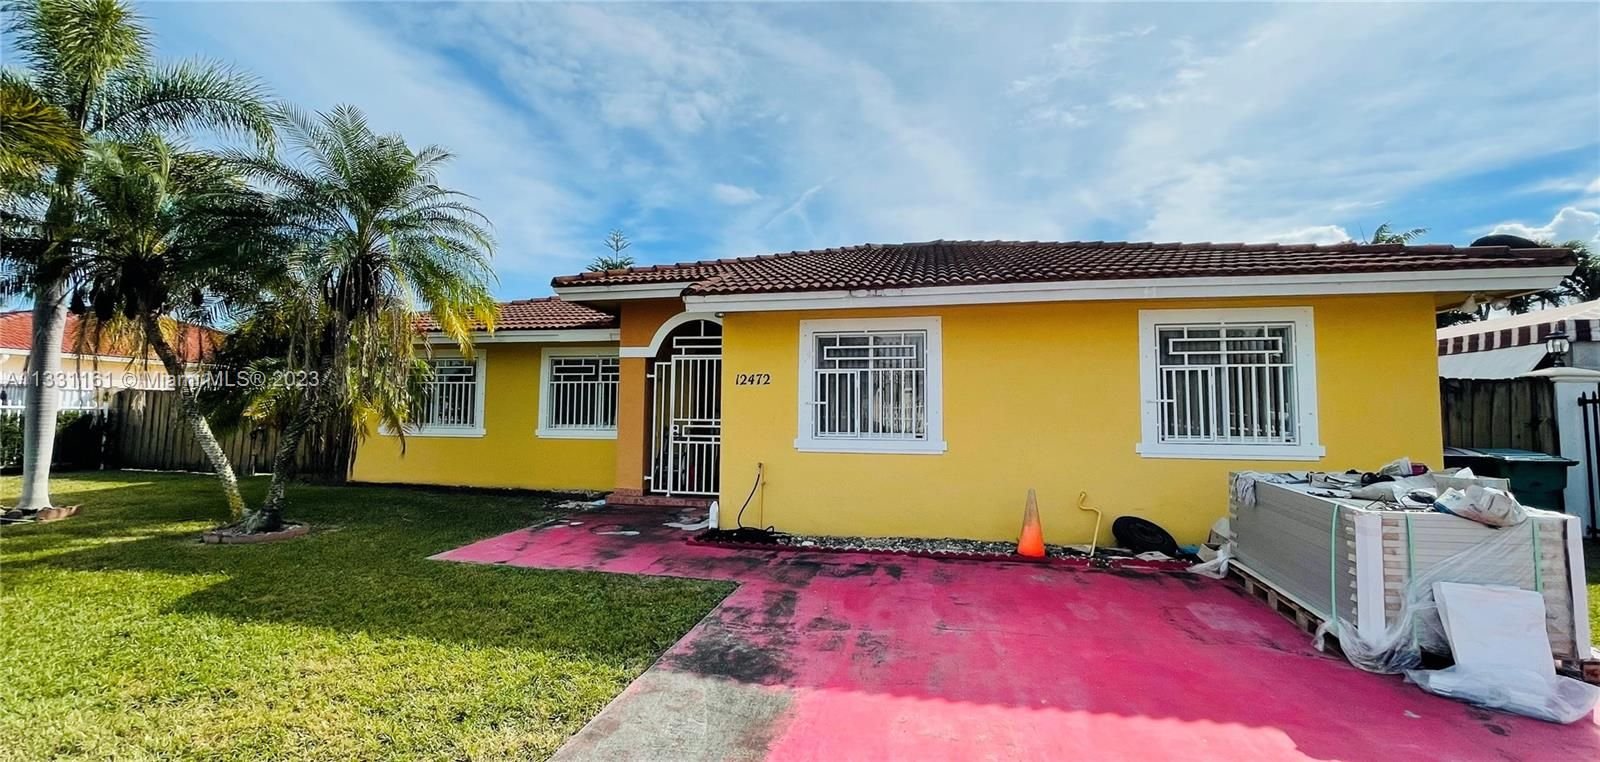 Real estate property located at 12472 220th St, Miami-Dade County, Miami, FL